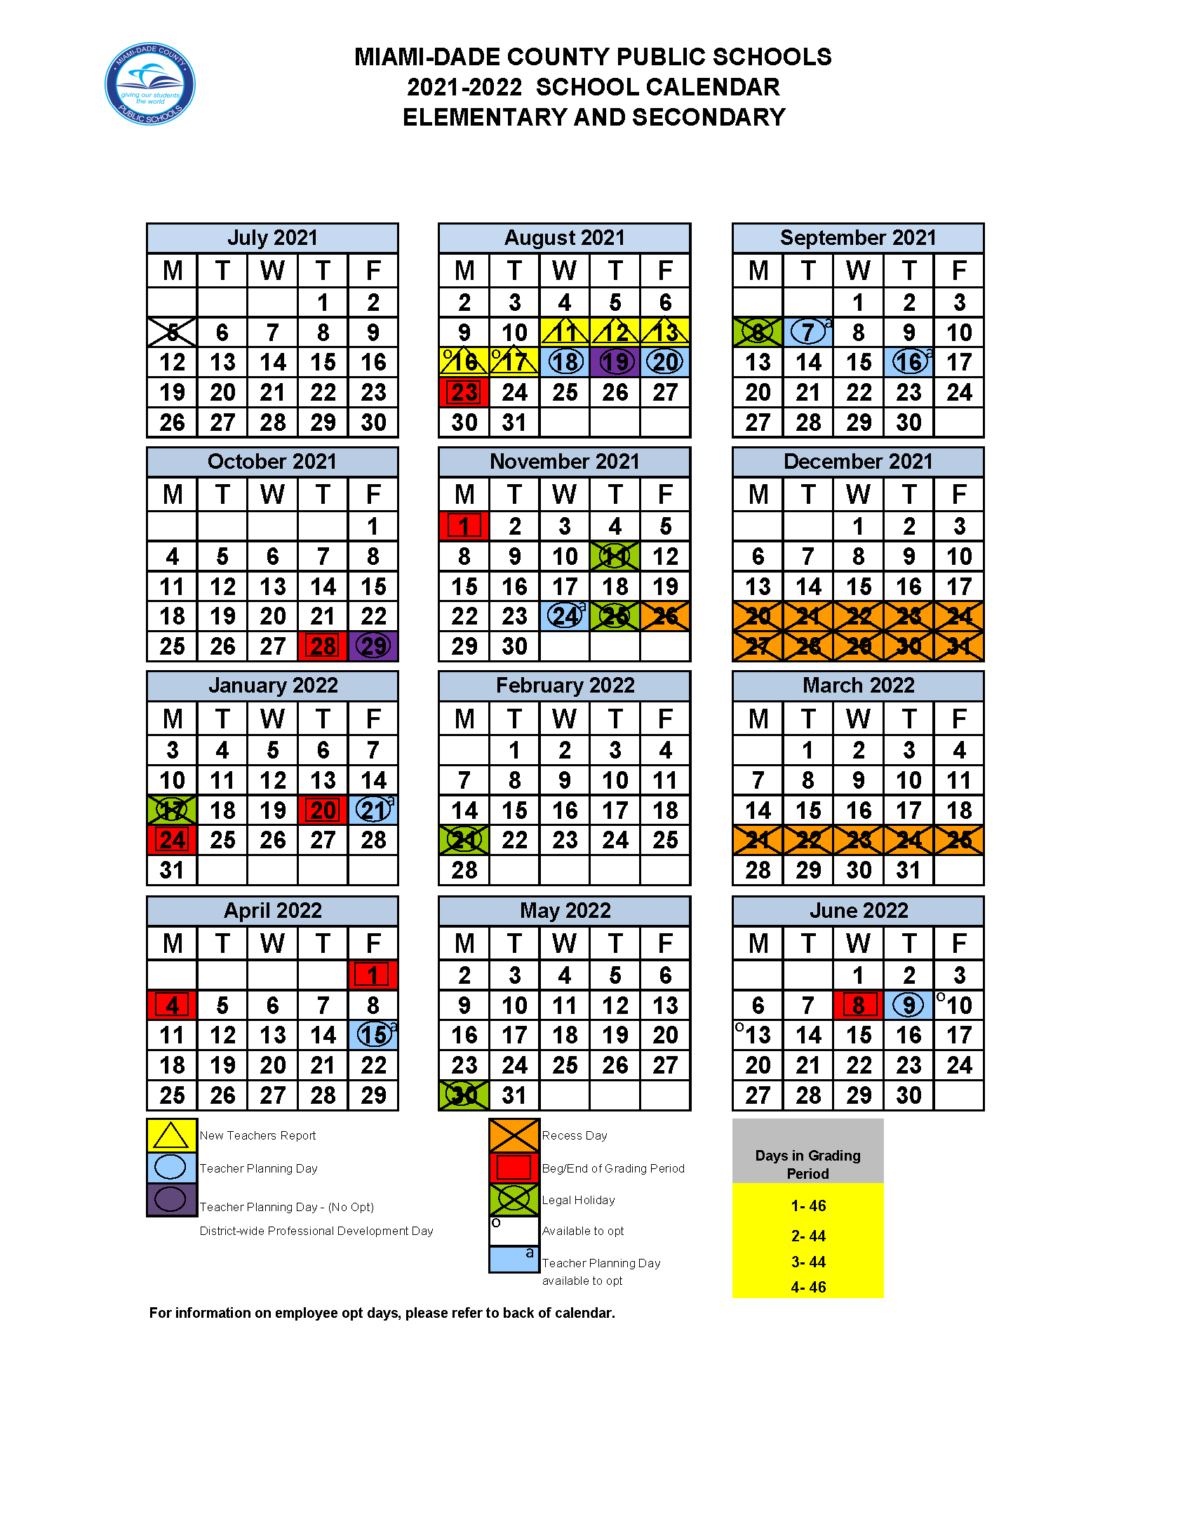 2021-2022 Miami-Dade and Broward School Calendars